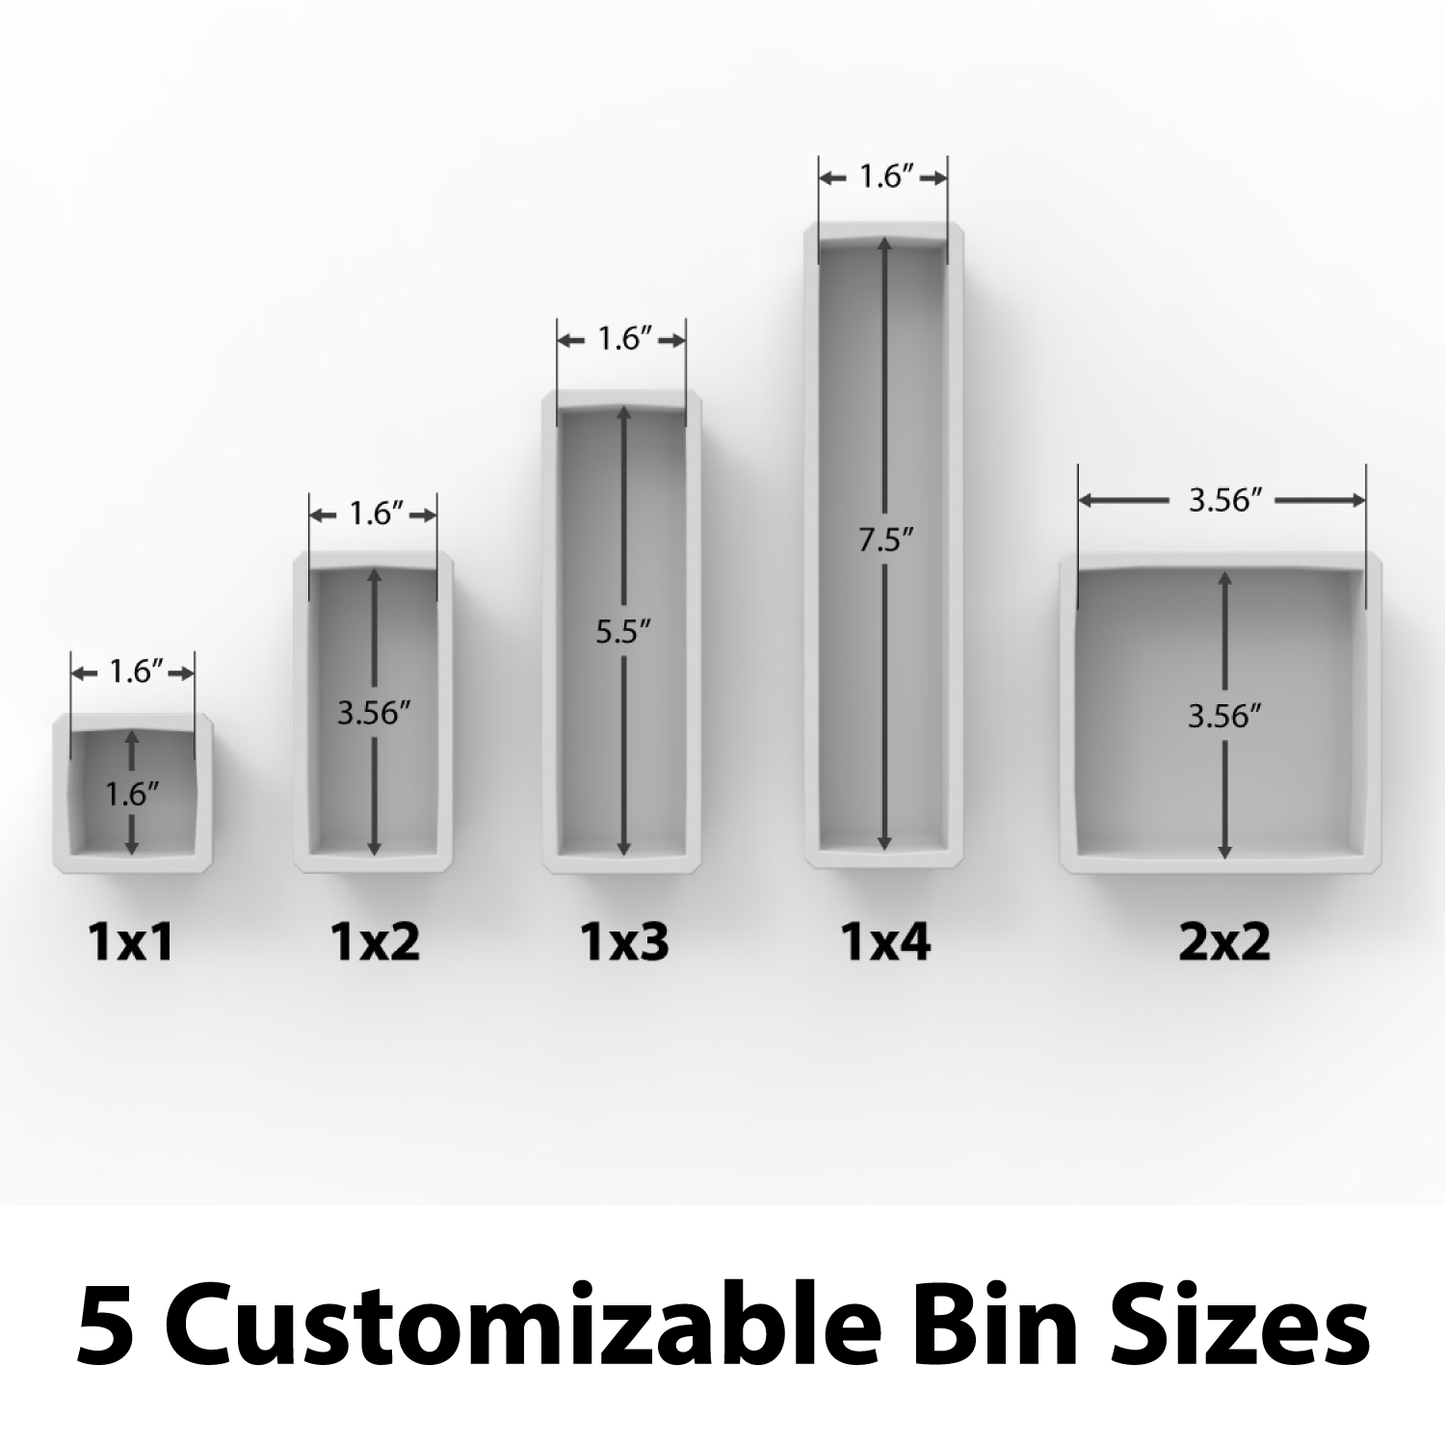 2 Customizable 1x4 Bins (1.6" x 7.5")